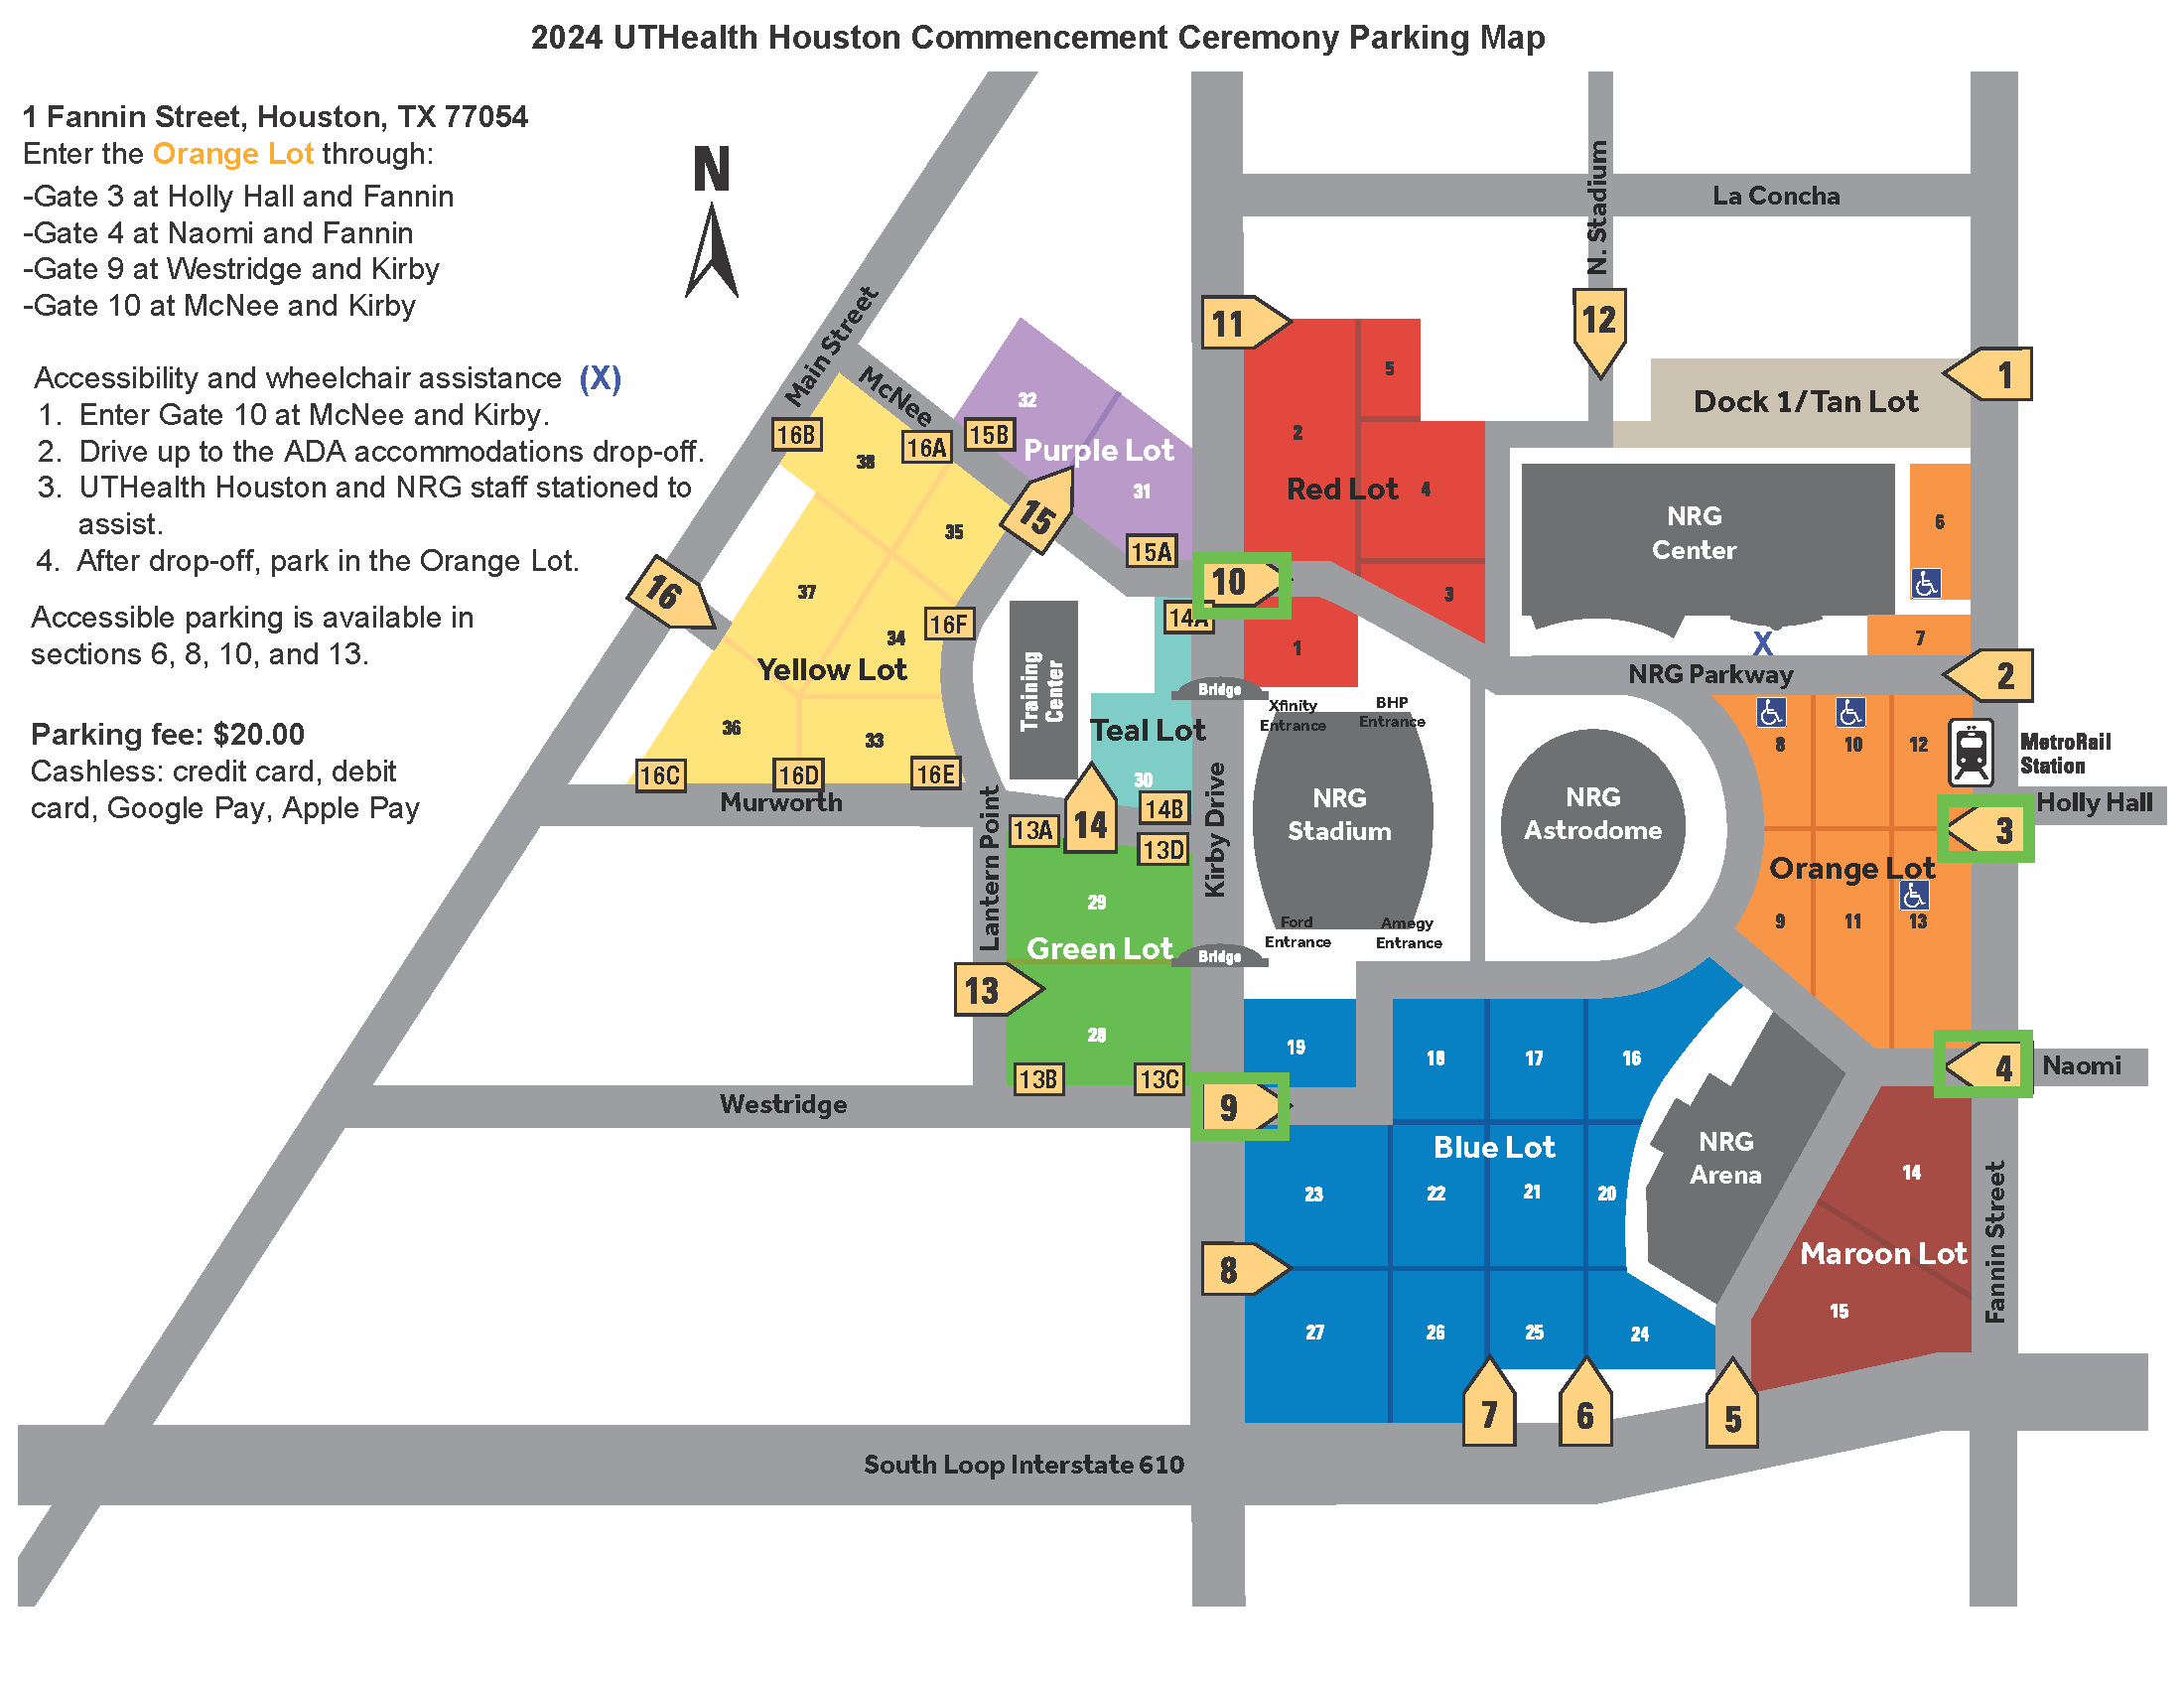 uthealth-houston-commencement-nrg-center-parking-map.png